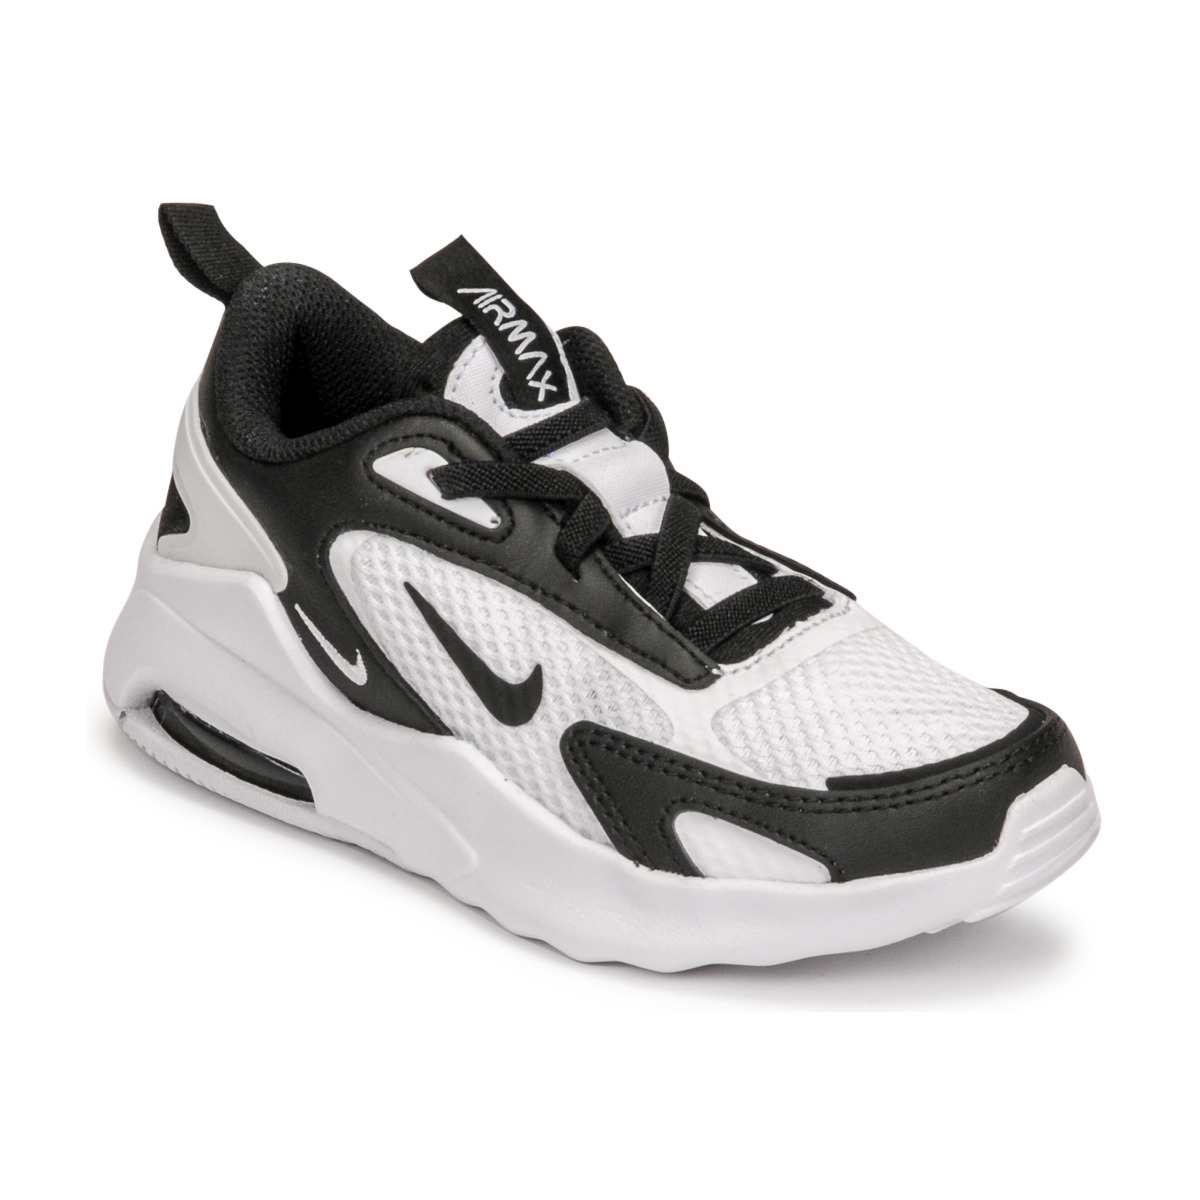 vertrekken Begrijpen plek Nike AIR MAX BOLT PS White / Black - Free delivery | Spartoo NET ! - Shoes  Low top trainers Child USD/$70.00